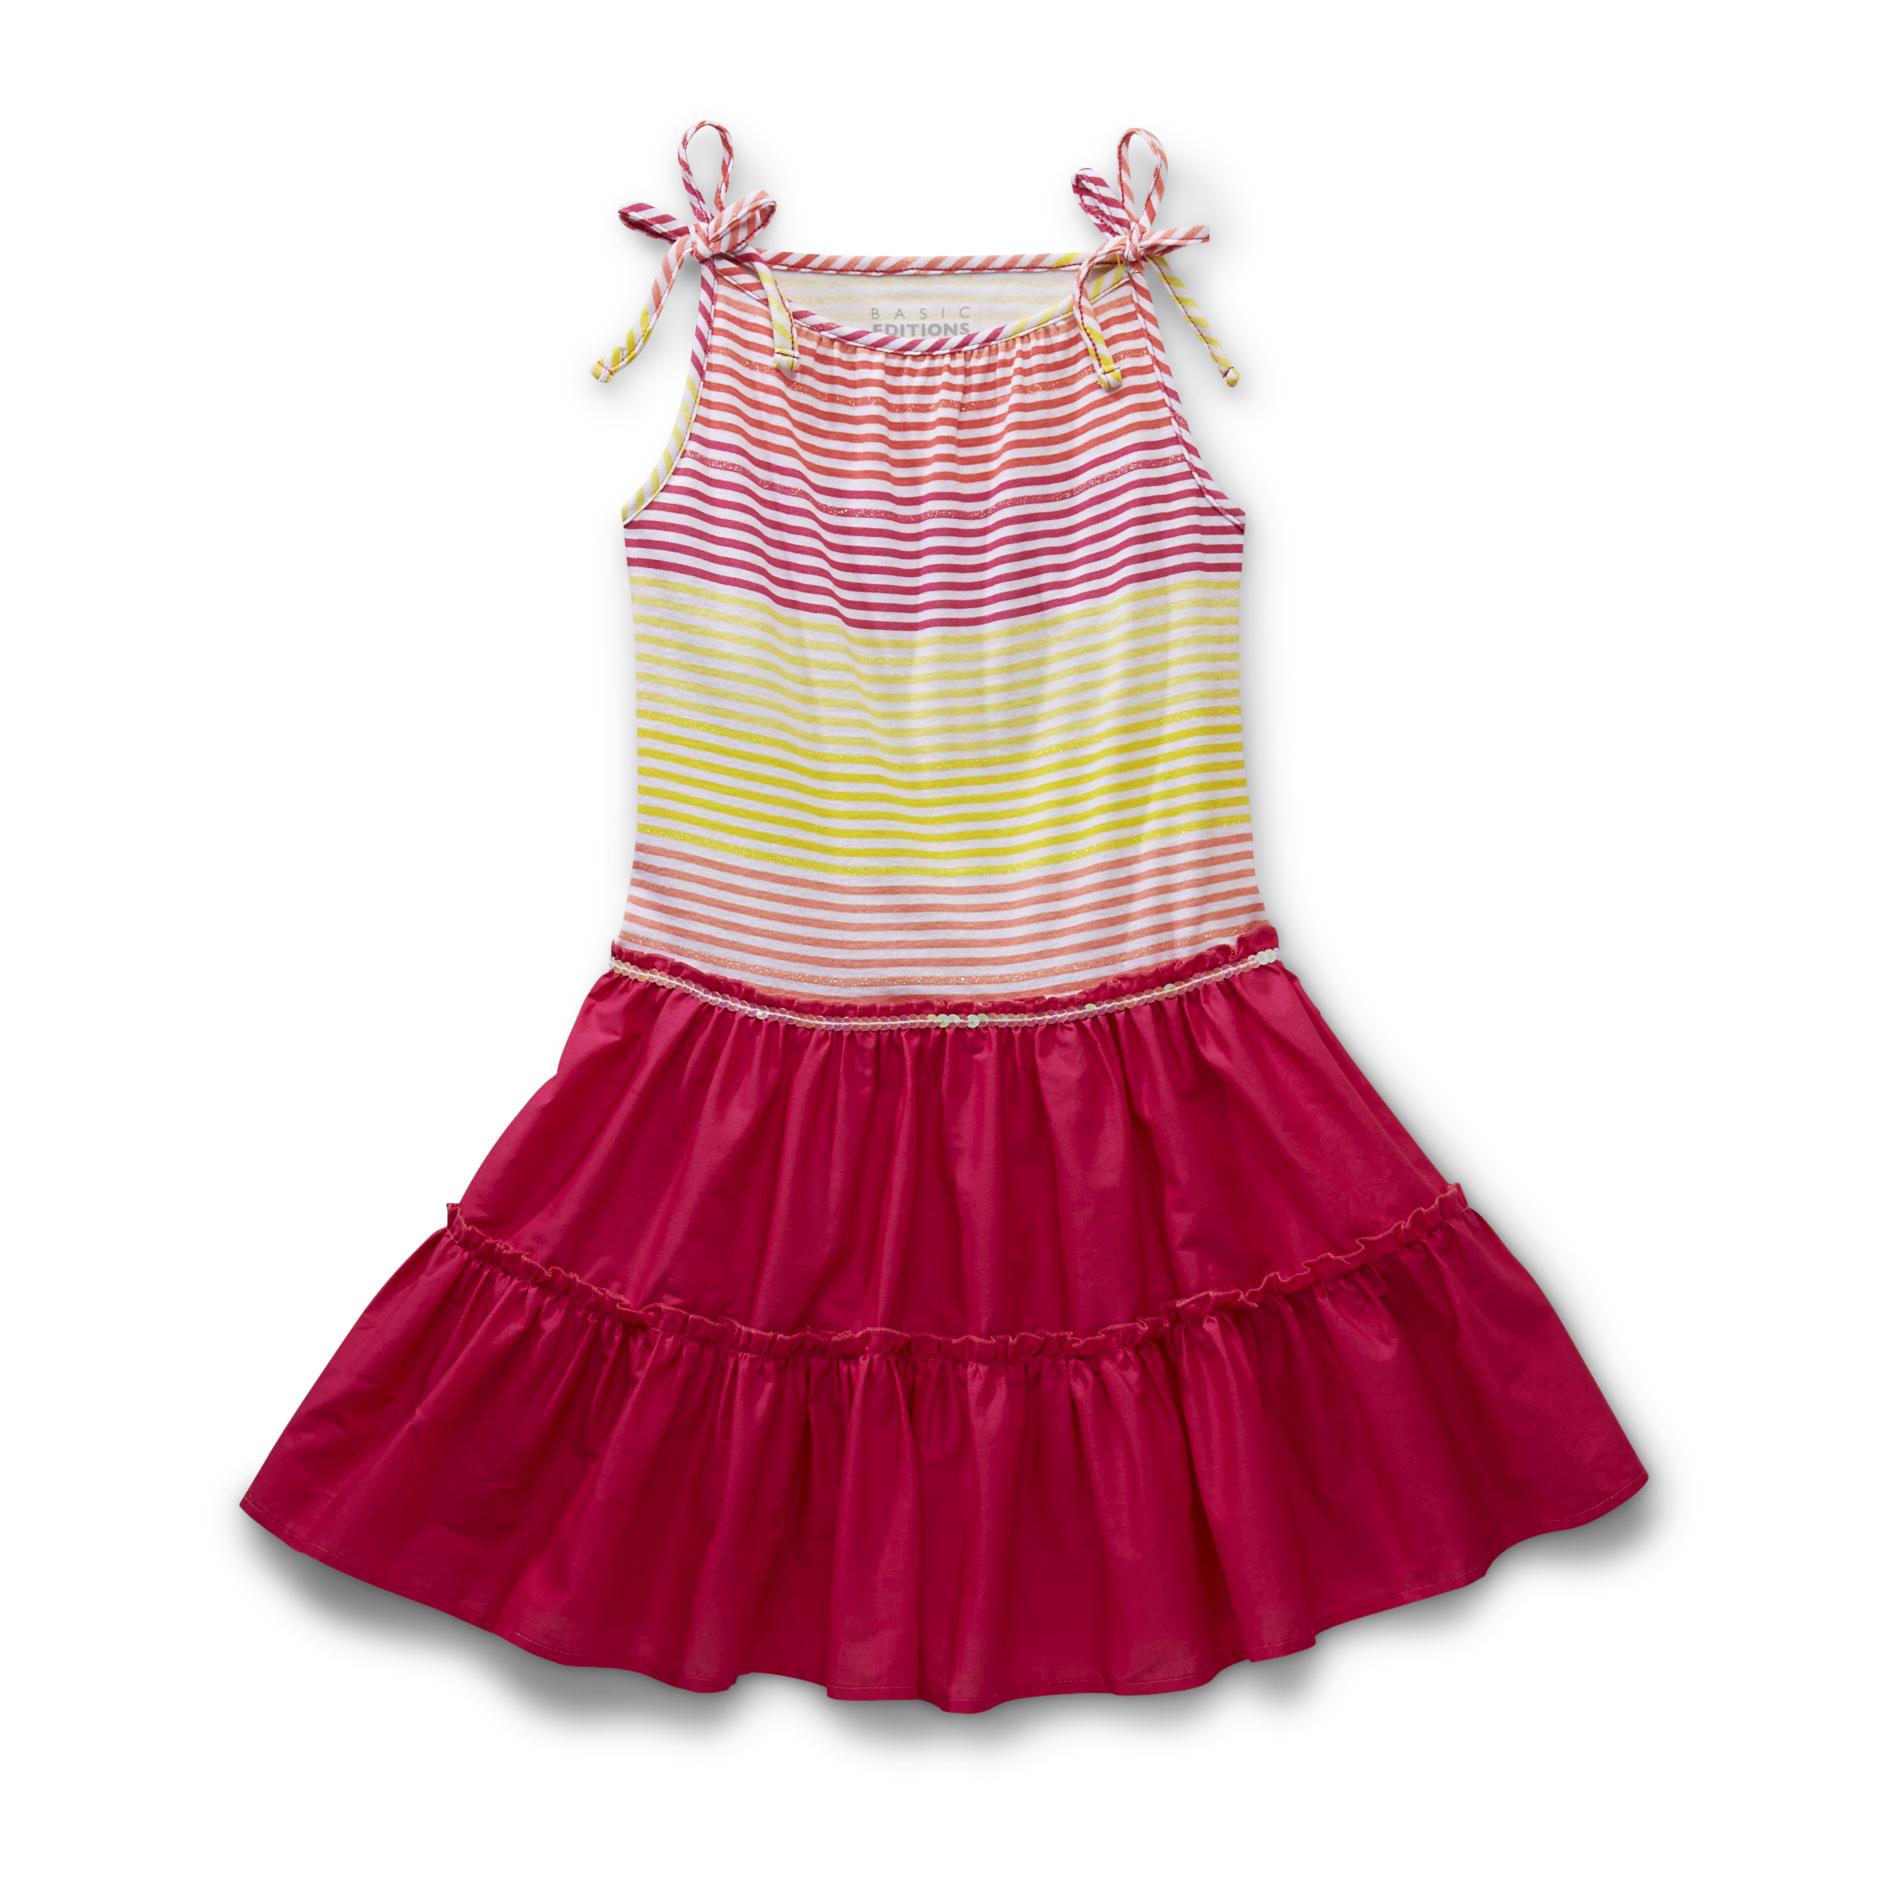 Basic Editions Girl's Sleeveless Sundress - Colorblock Stripes